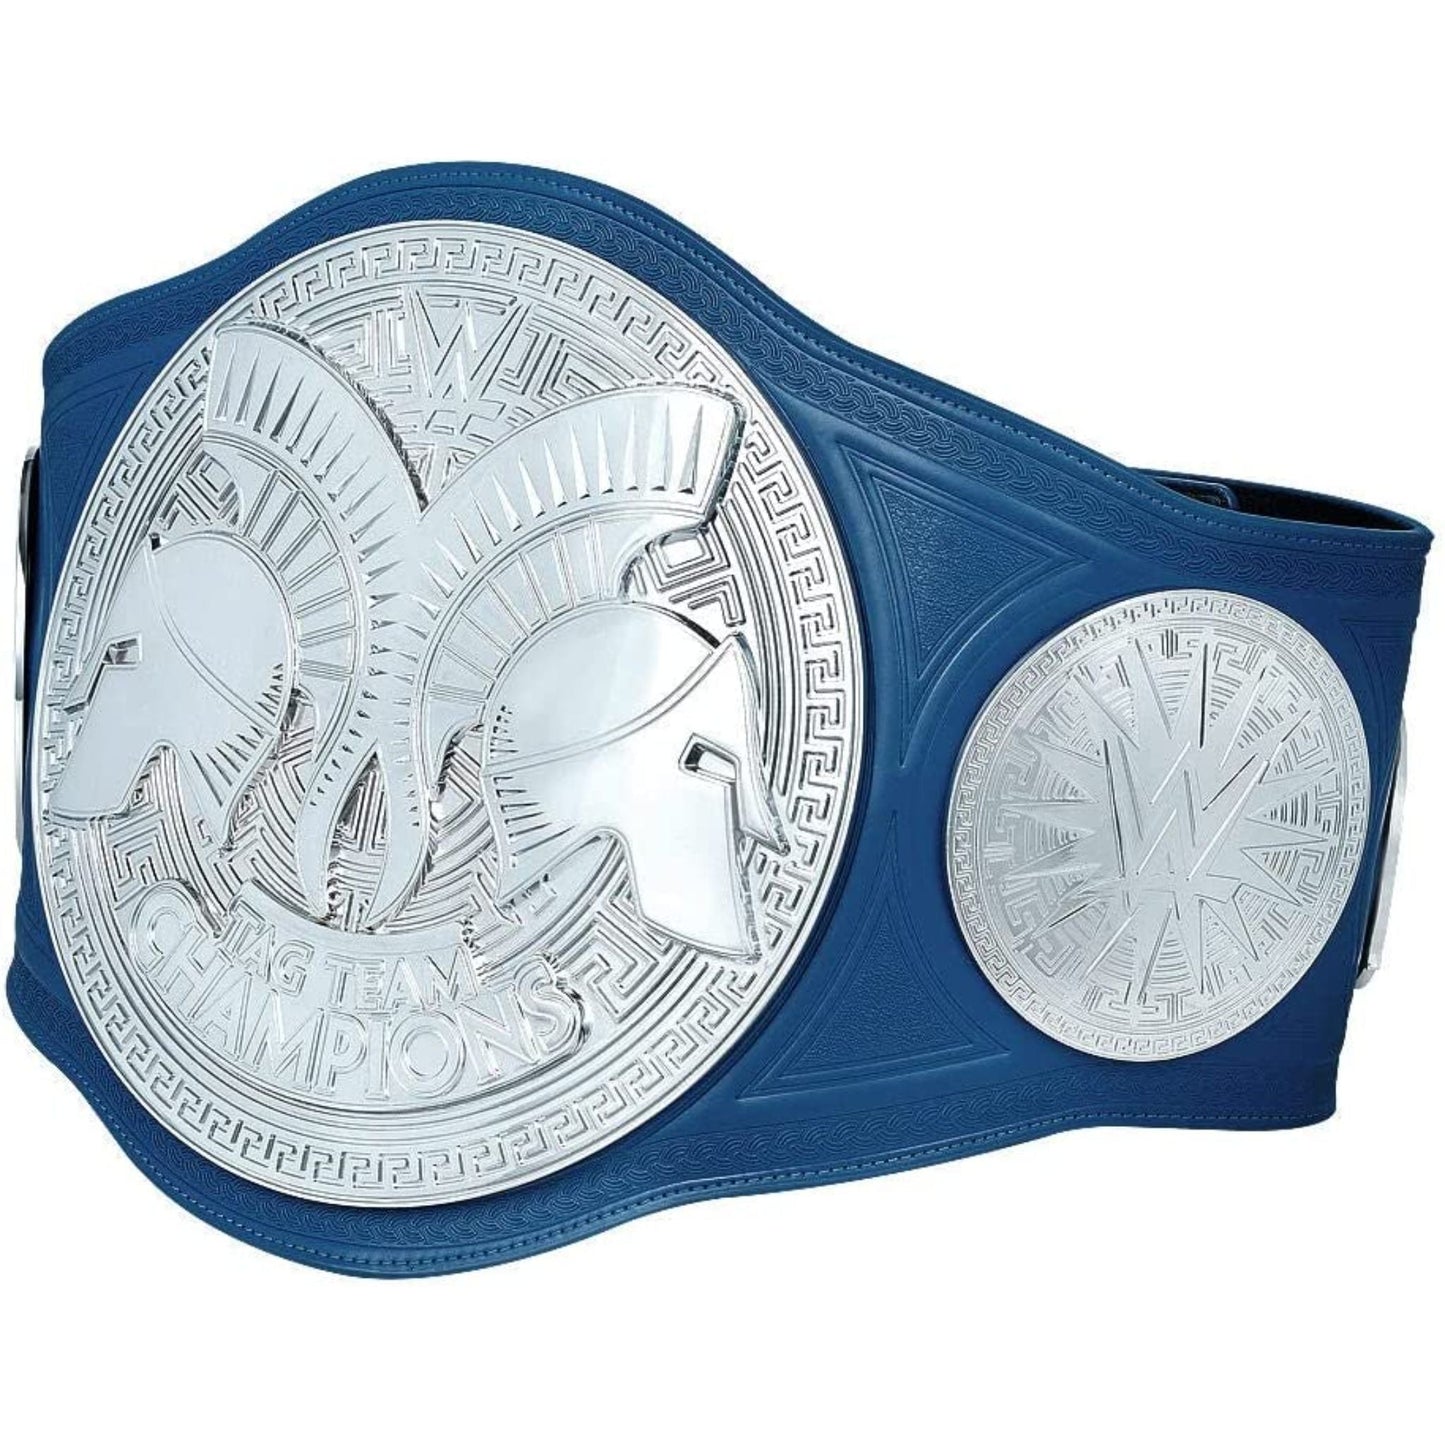 WWE SmackDown Tag Team Championship Replica Title Belt